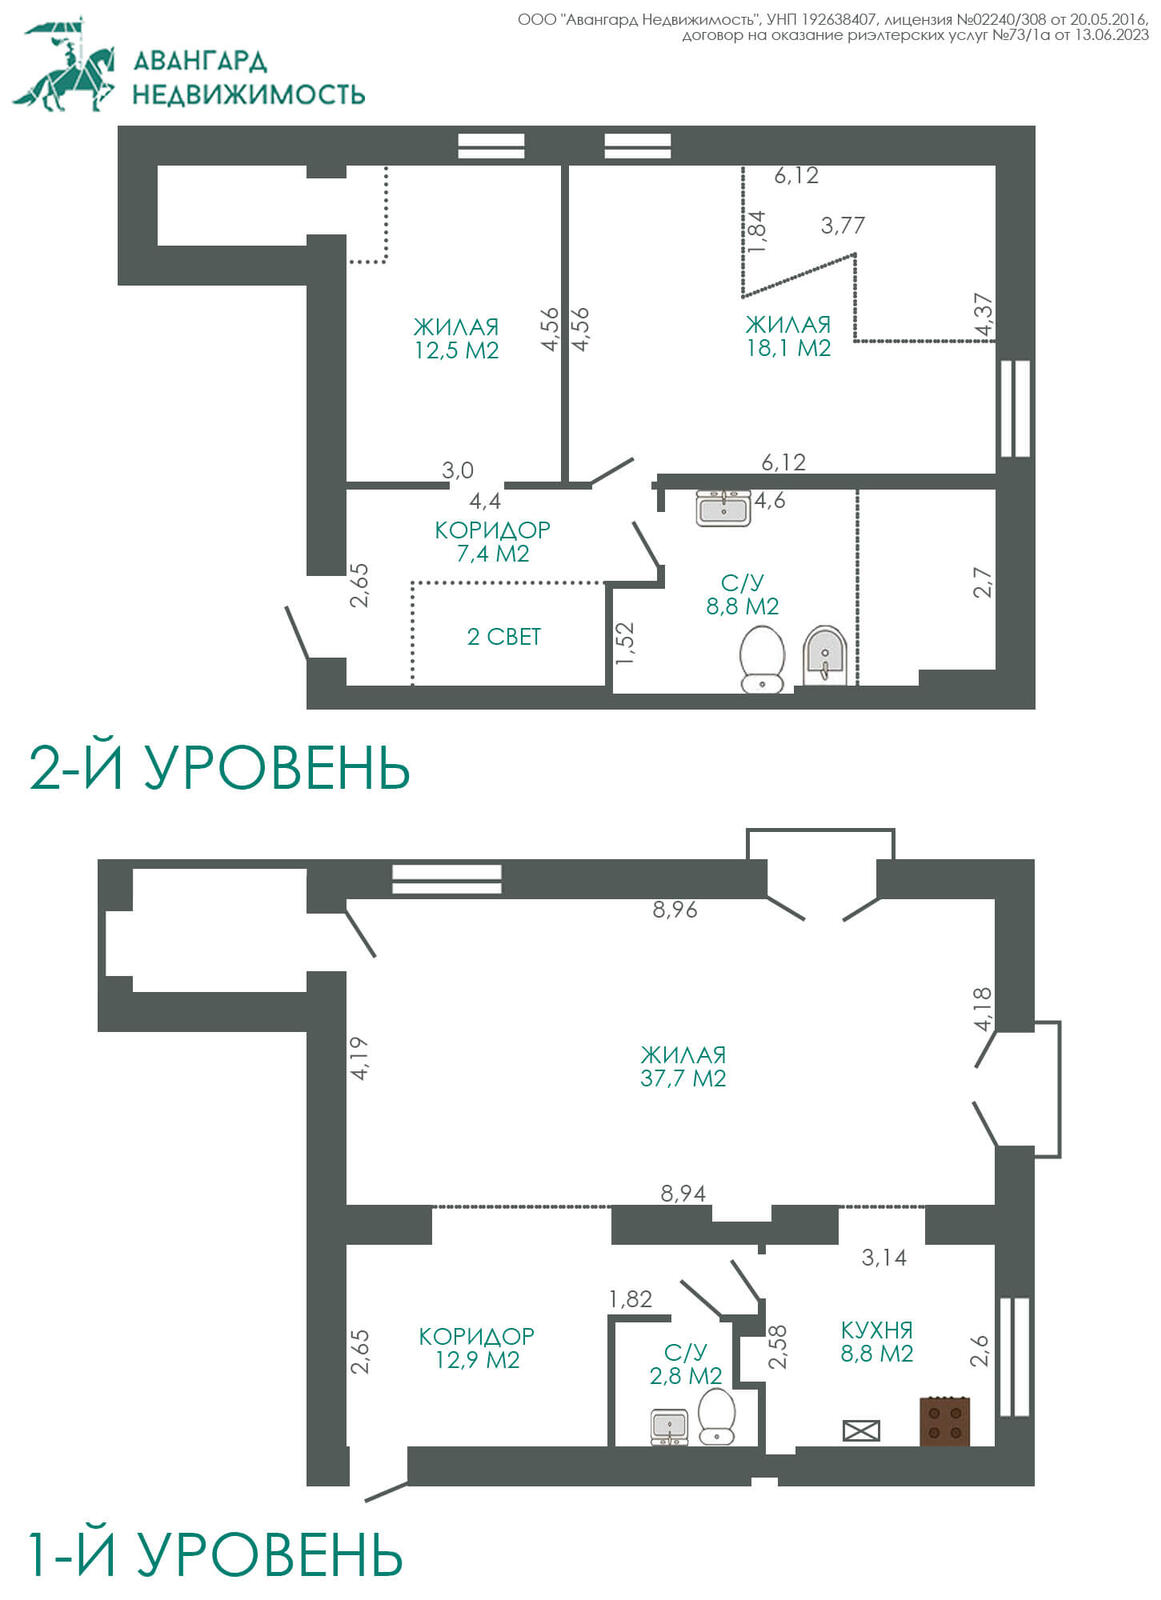 Цена аренды квартиры, Минск, пр-т Независимости, д. 113